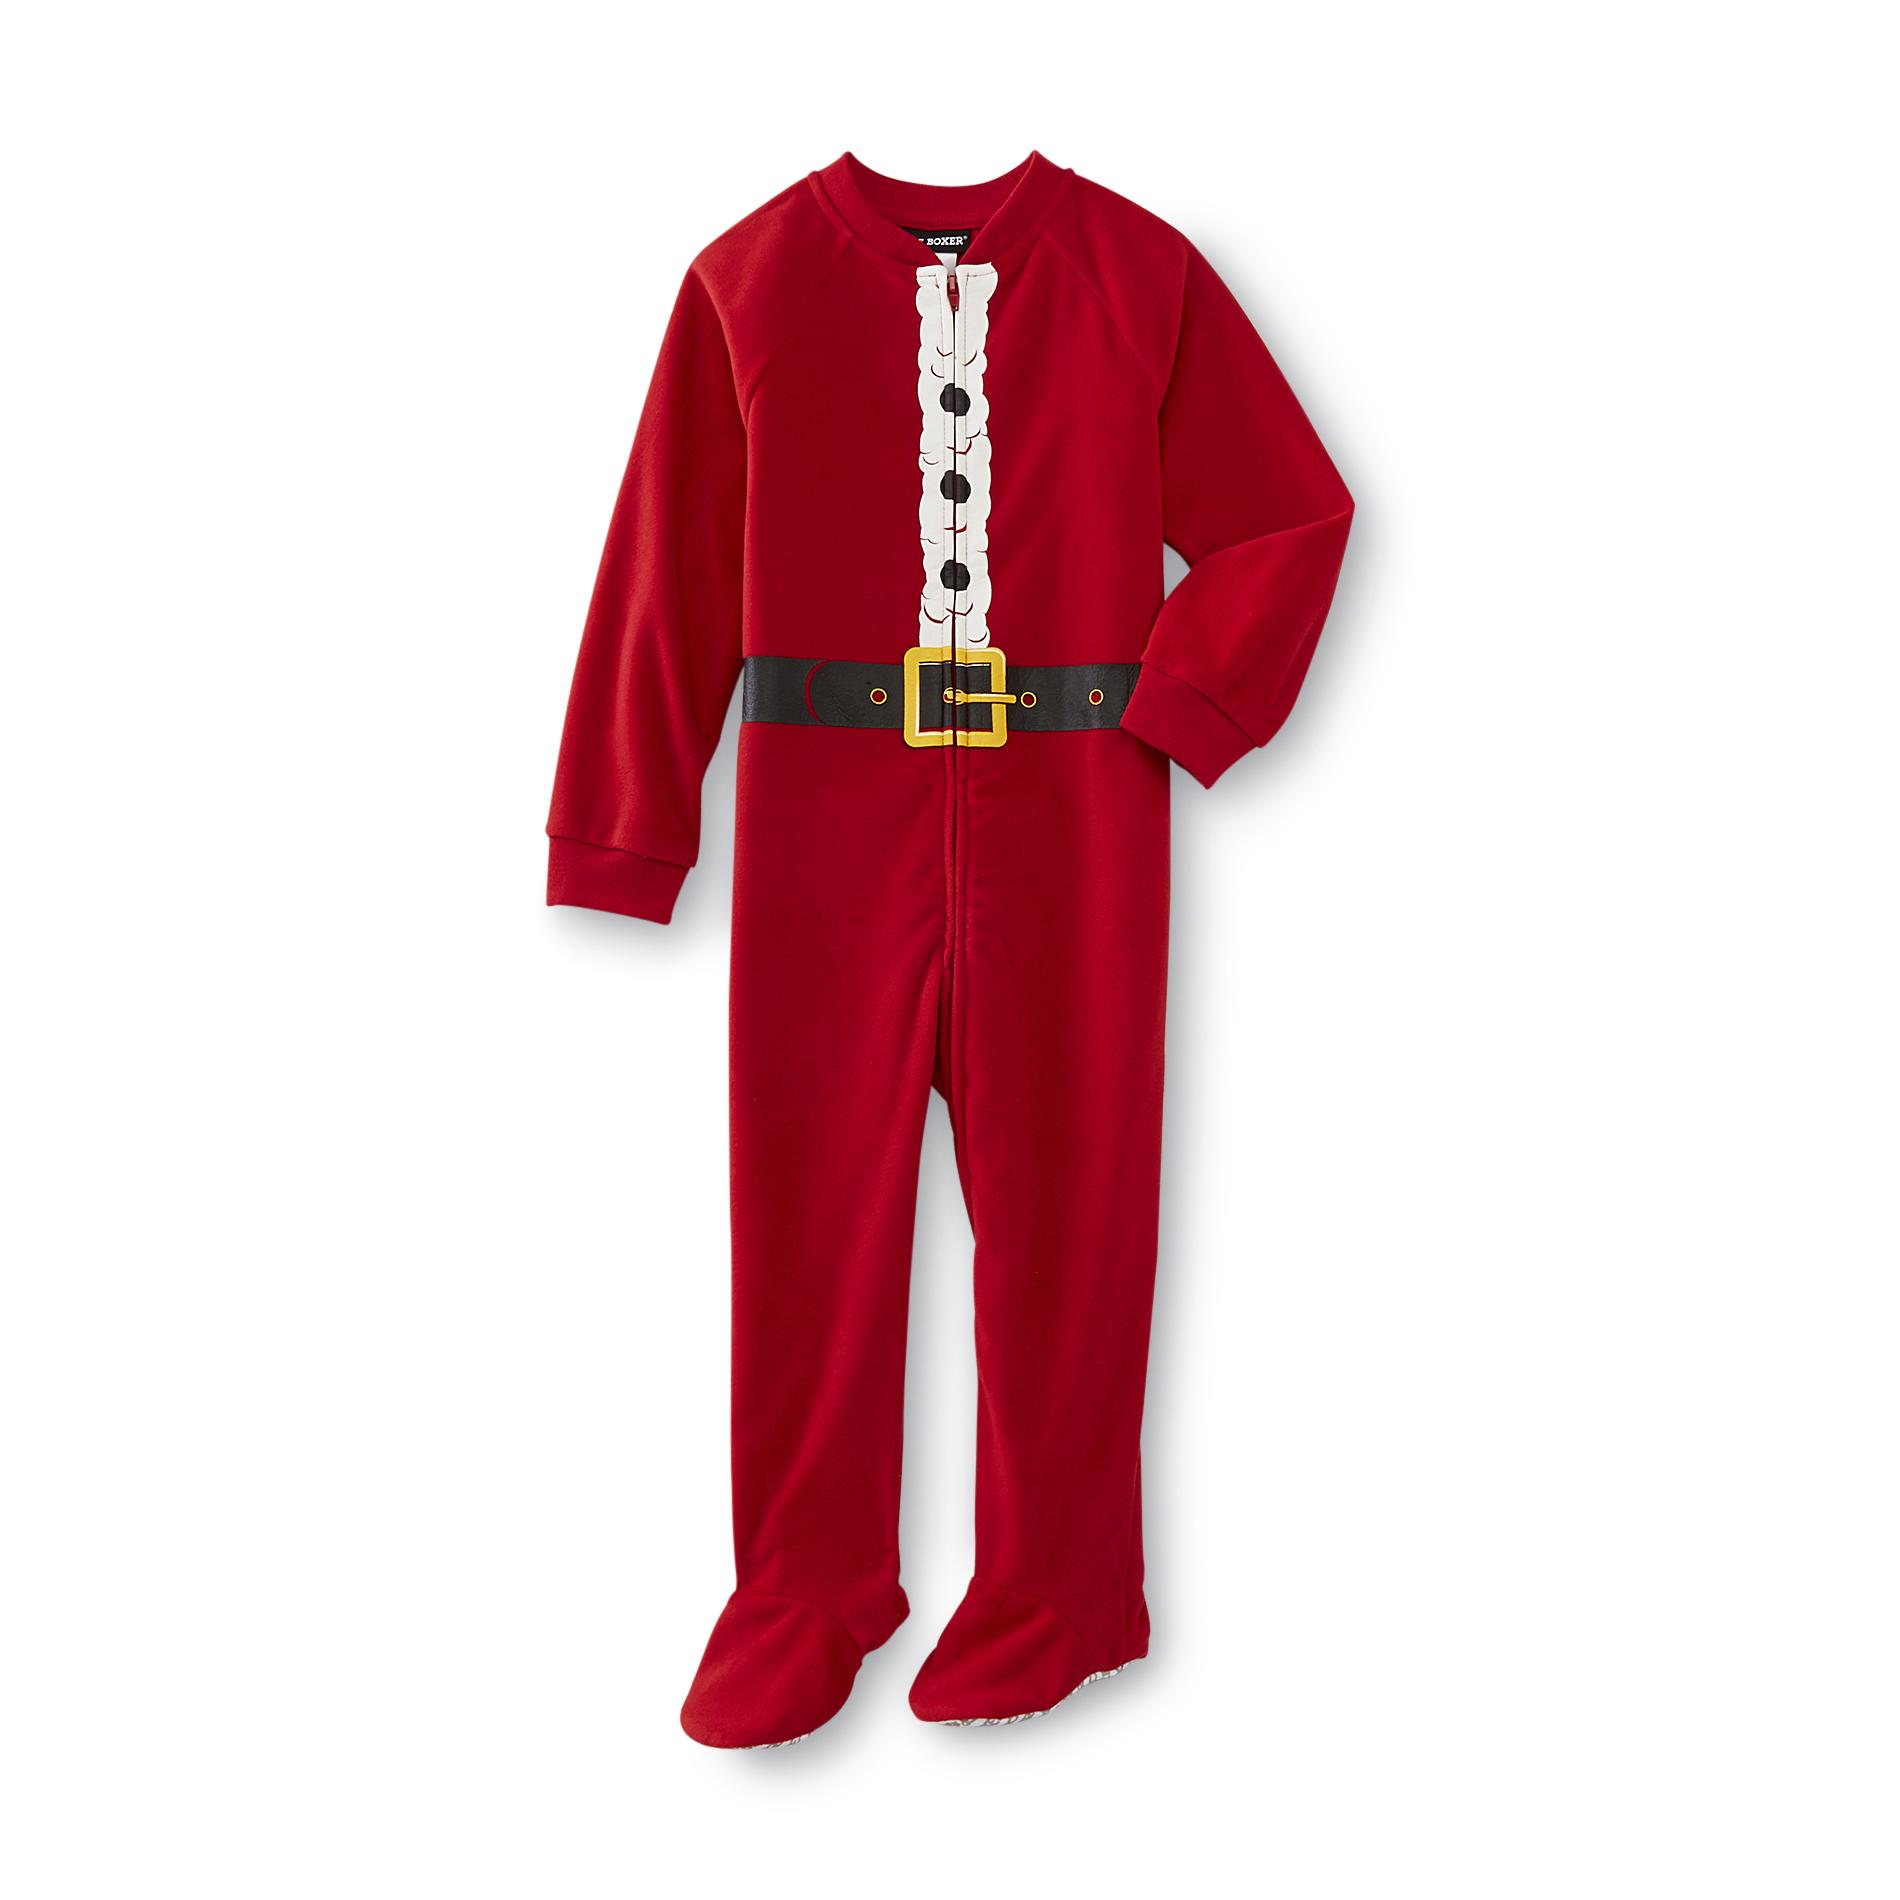 Joe Boxer Infant & Toddler Boy's Christmas Fleece Sleeper Pajamas - Santa